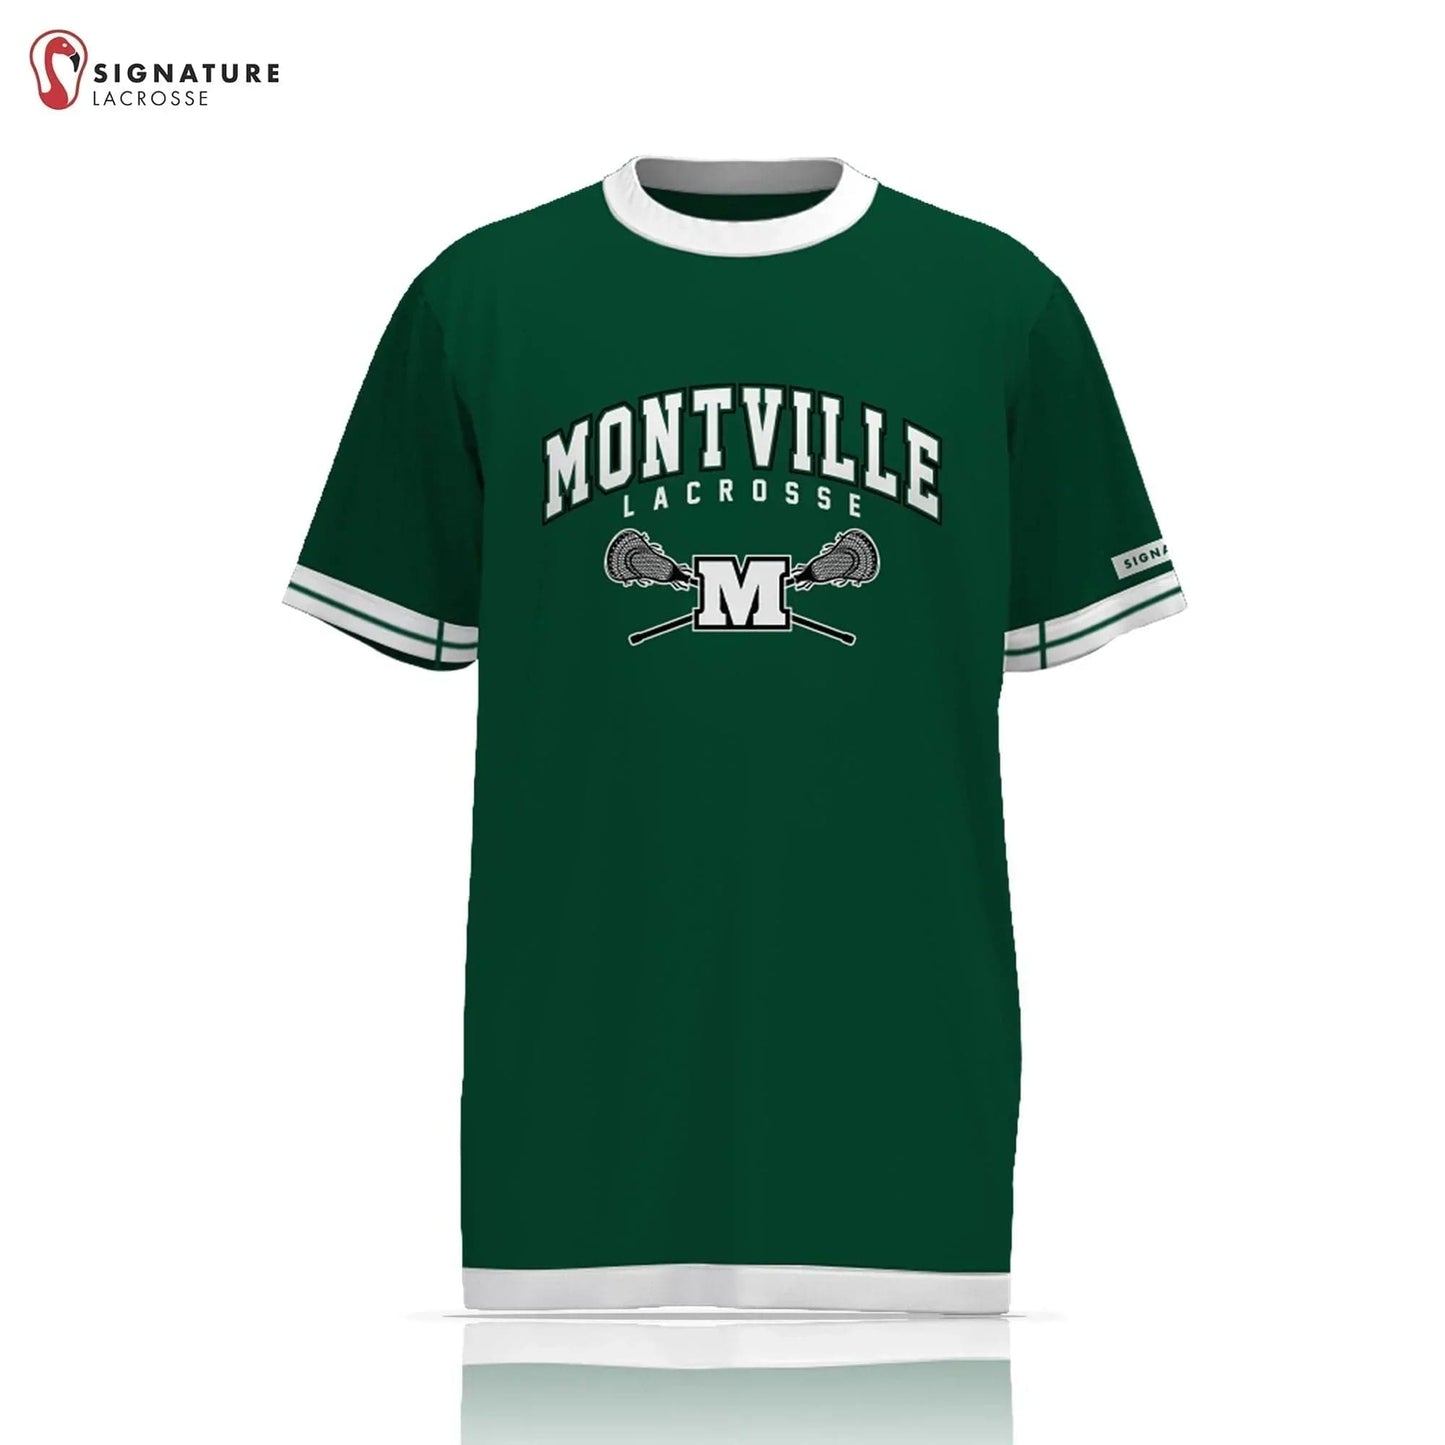 Montville Lacrosse Men's Game Short Sleeve Shooter Shirt: 8th Grade Signature Lacrosse